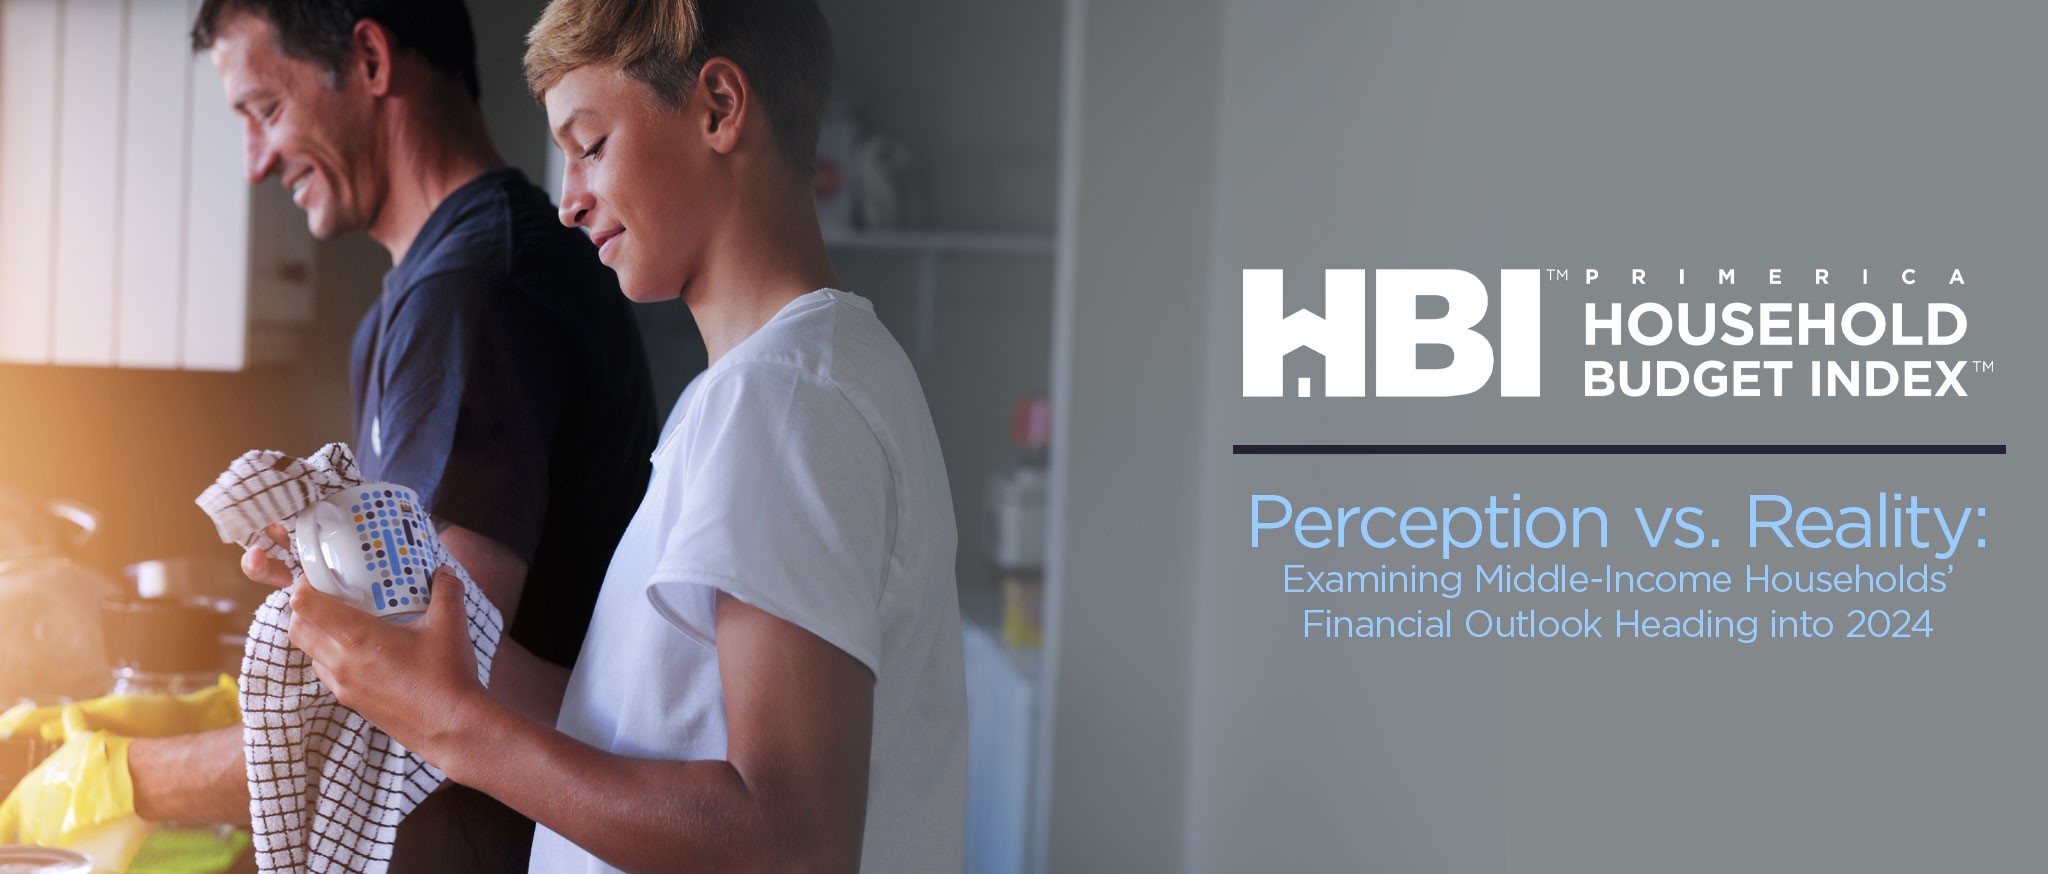 Primerica Household Budget Index™ (HBI™)